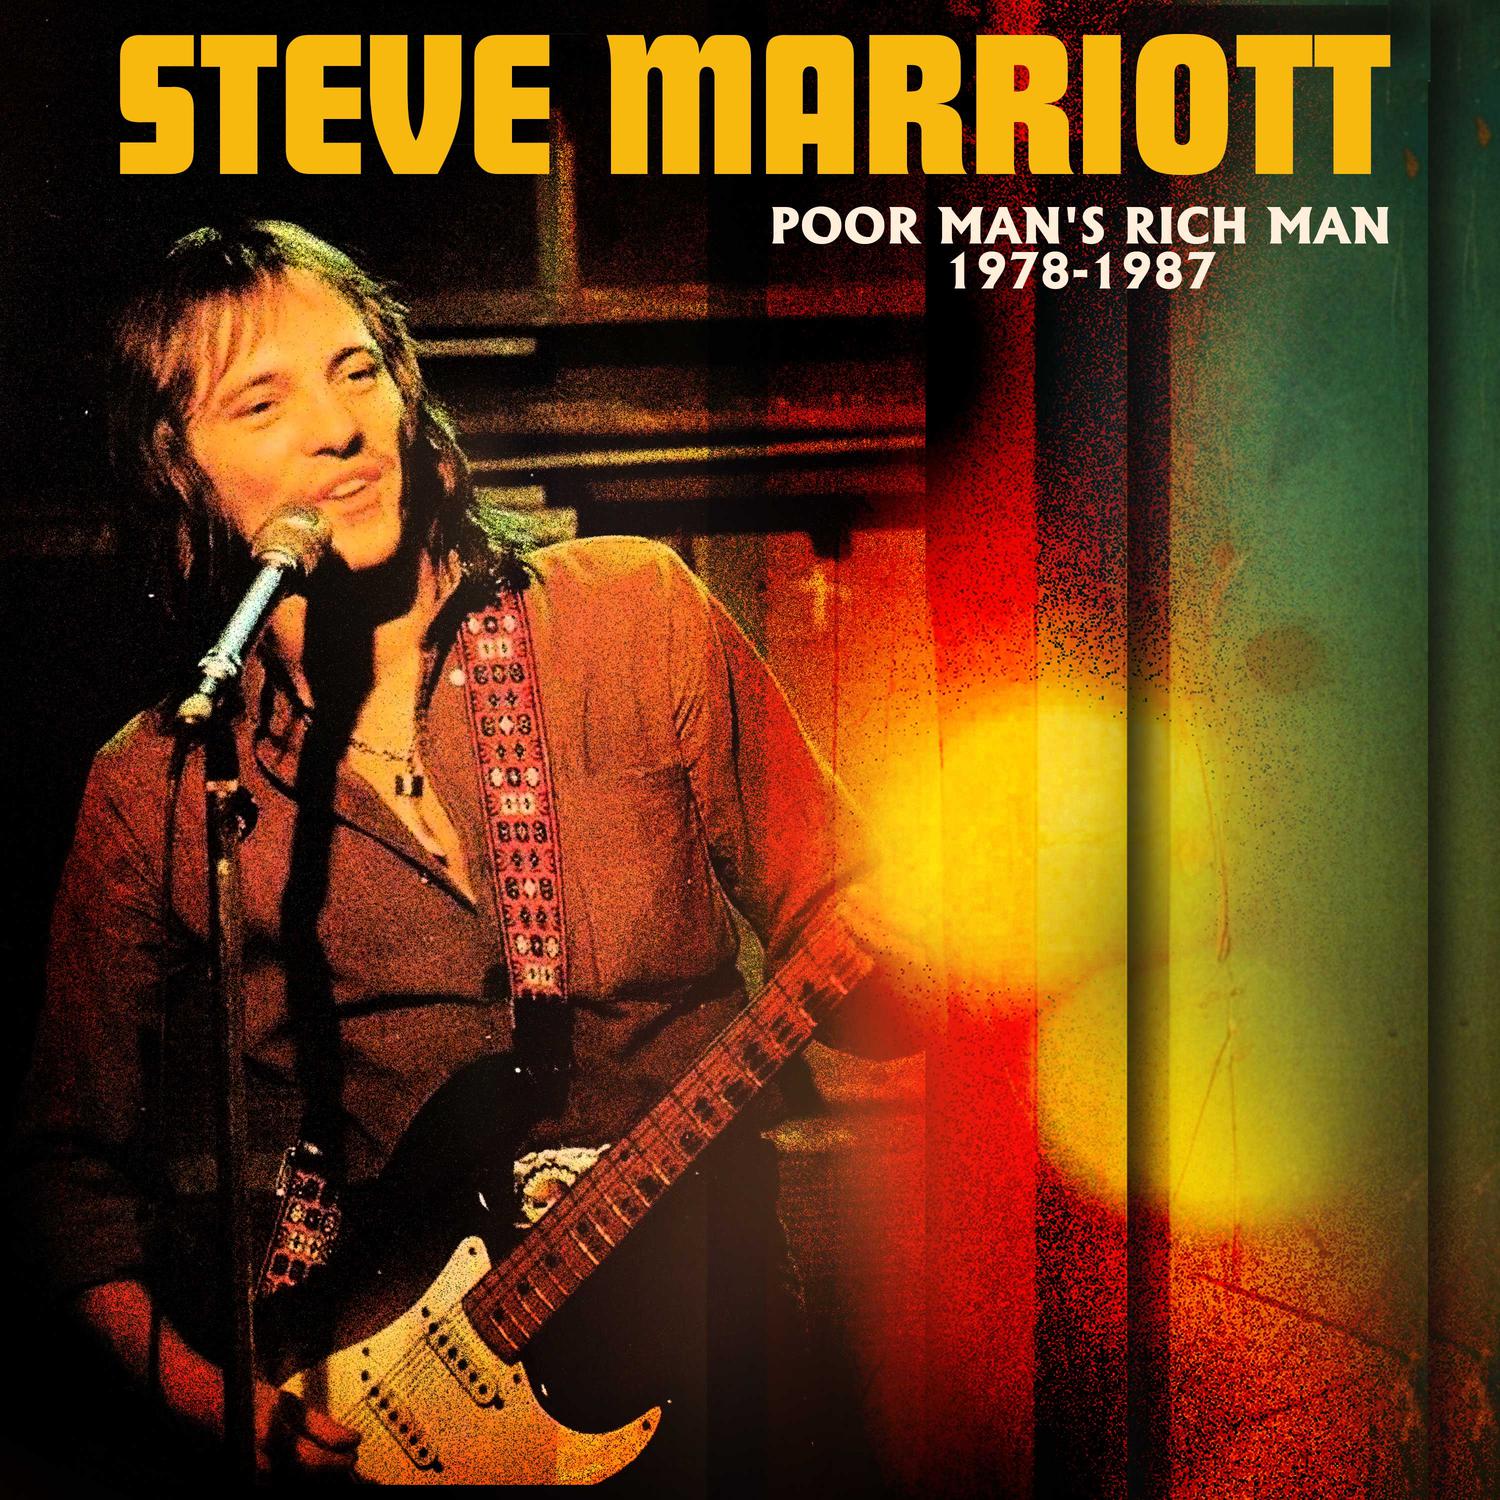 Steve Marriott - Over You (Remastered 1980 Version)